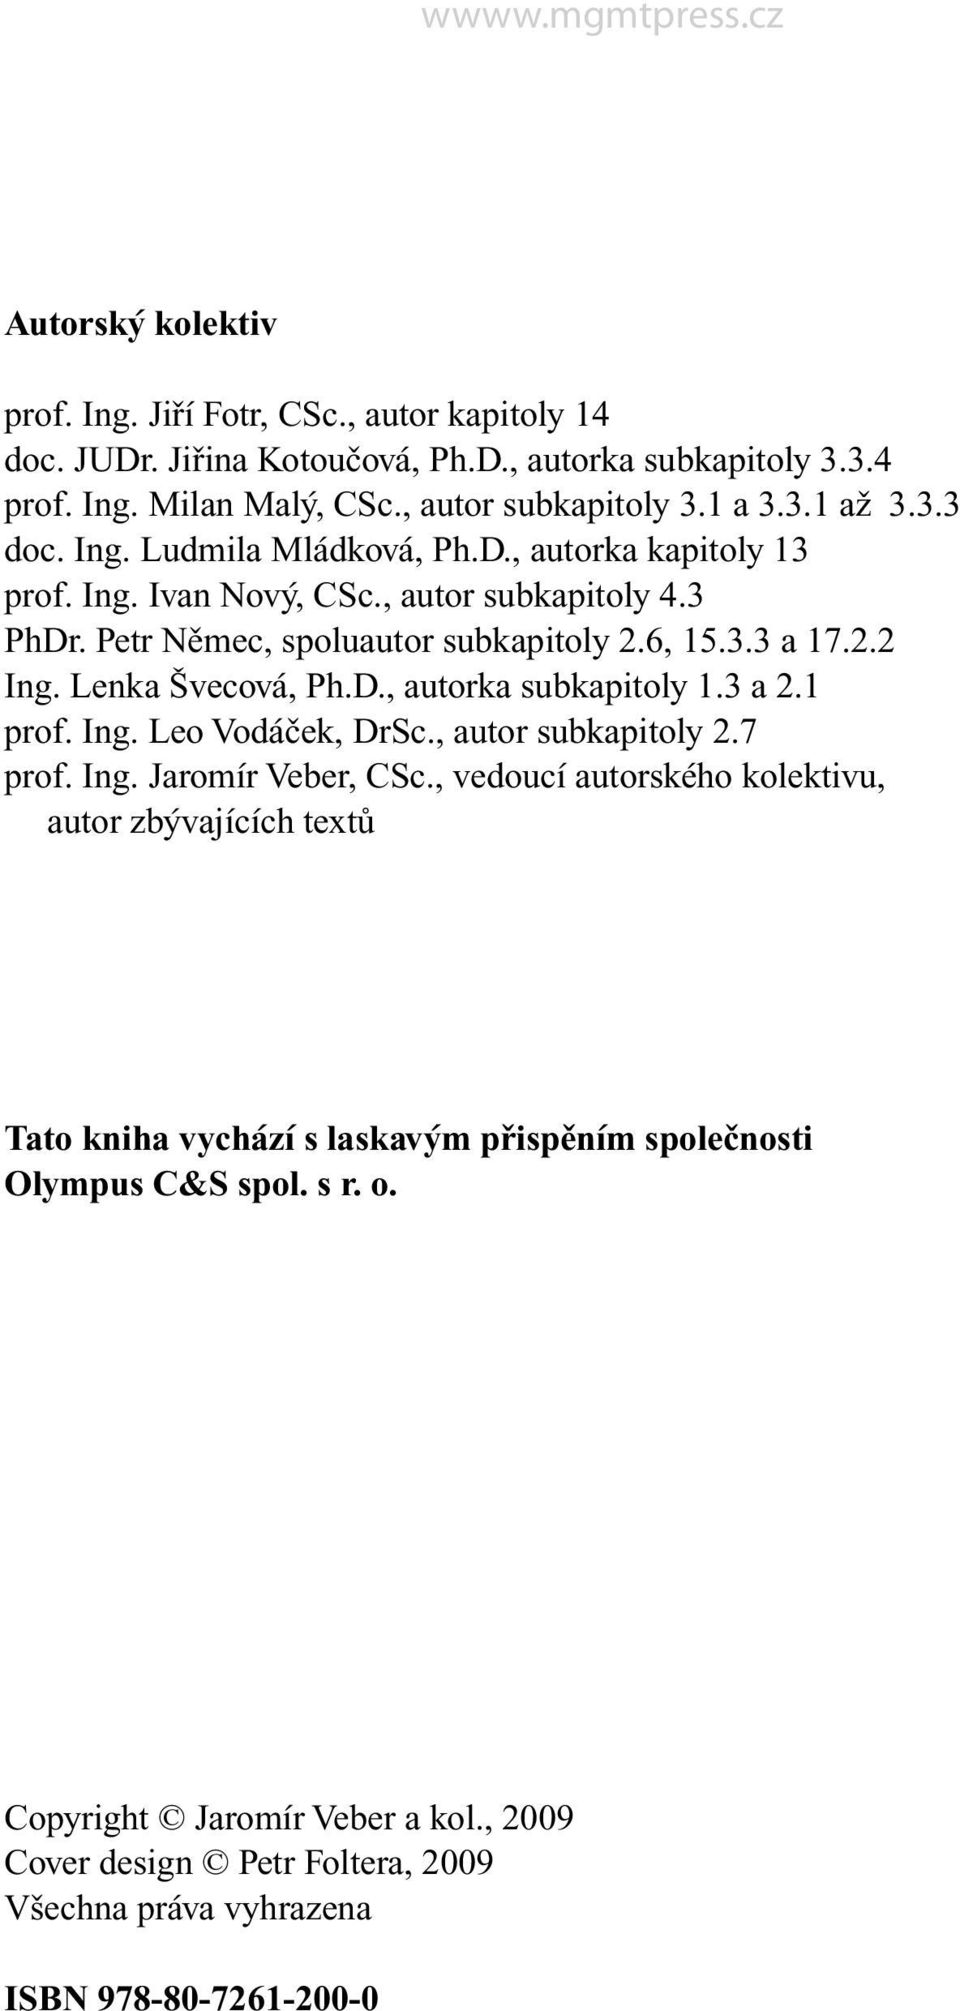 Lenka Švecová, Ph.D., autorka subkapitoly 1.3 a 2.1 prof. Ing. Leo Vodáček, DrSc., autor subkapitoly 2.7 prof. Ing. Jaromír Veber, CSc.